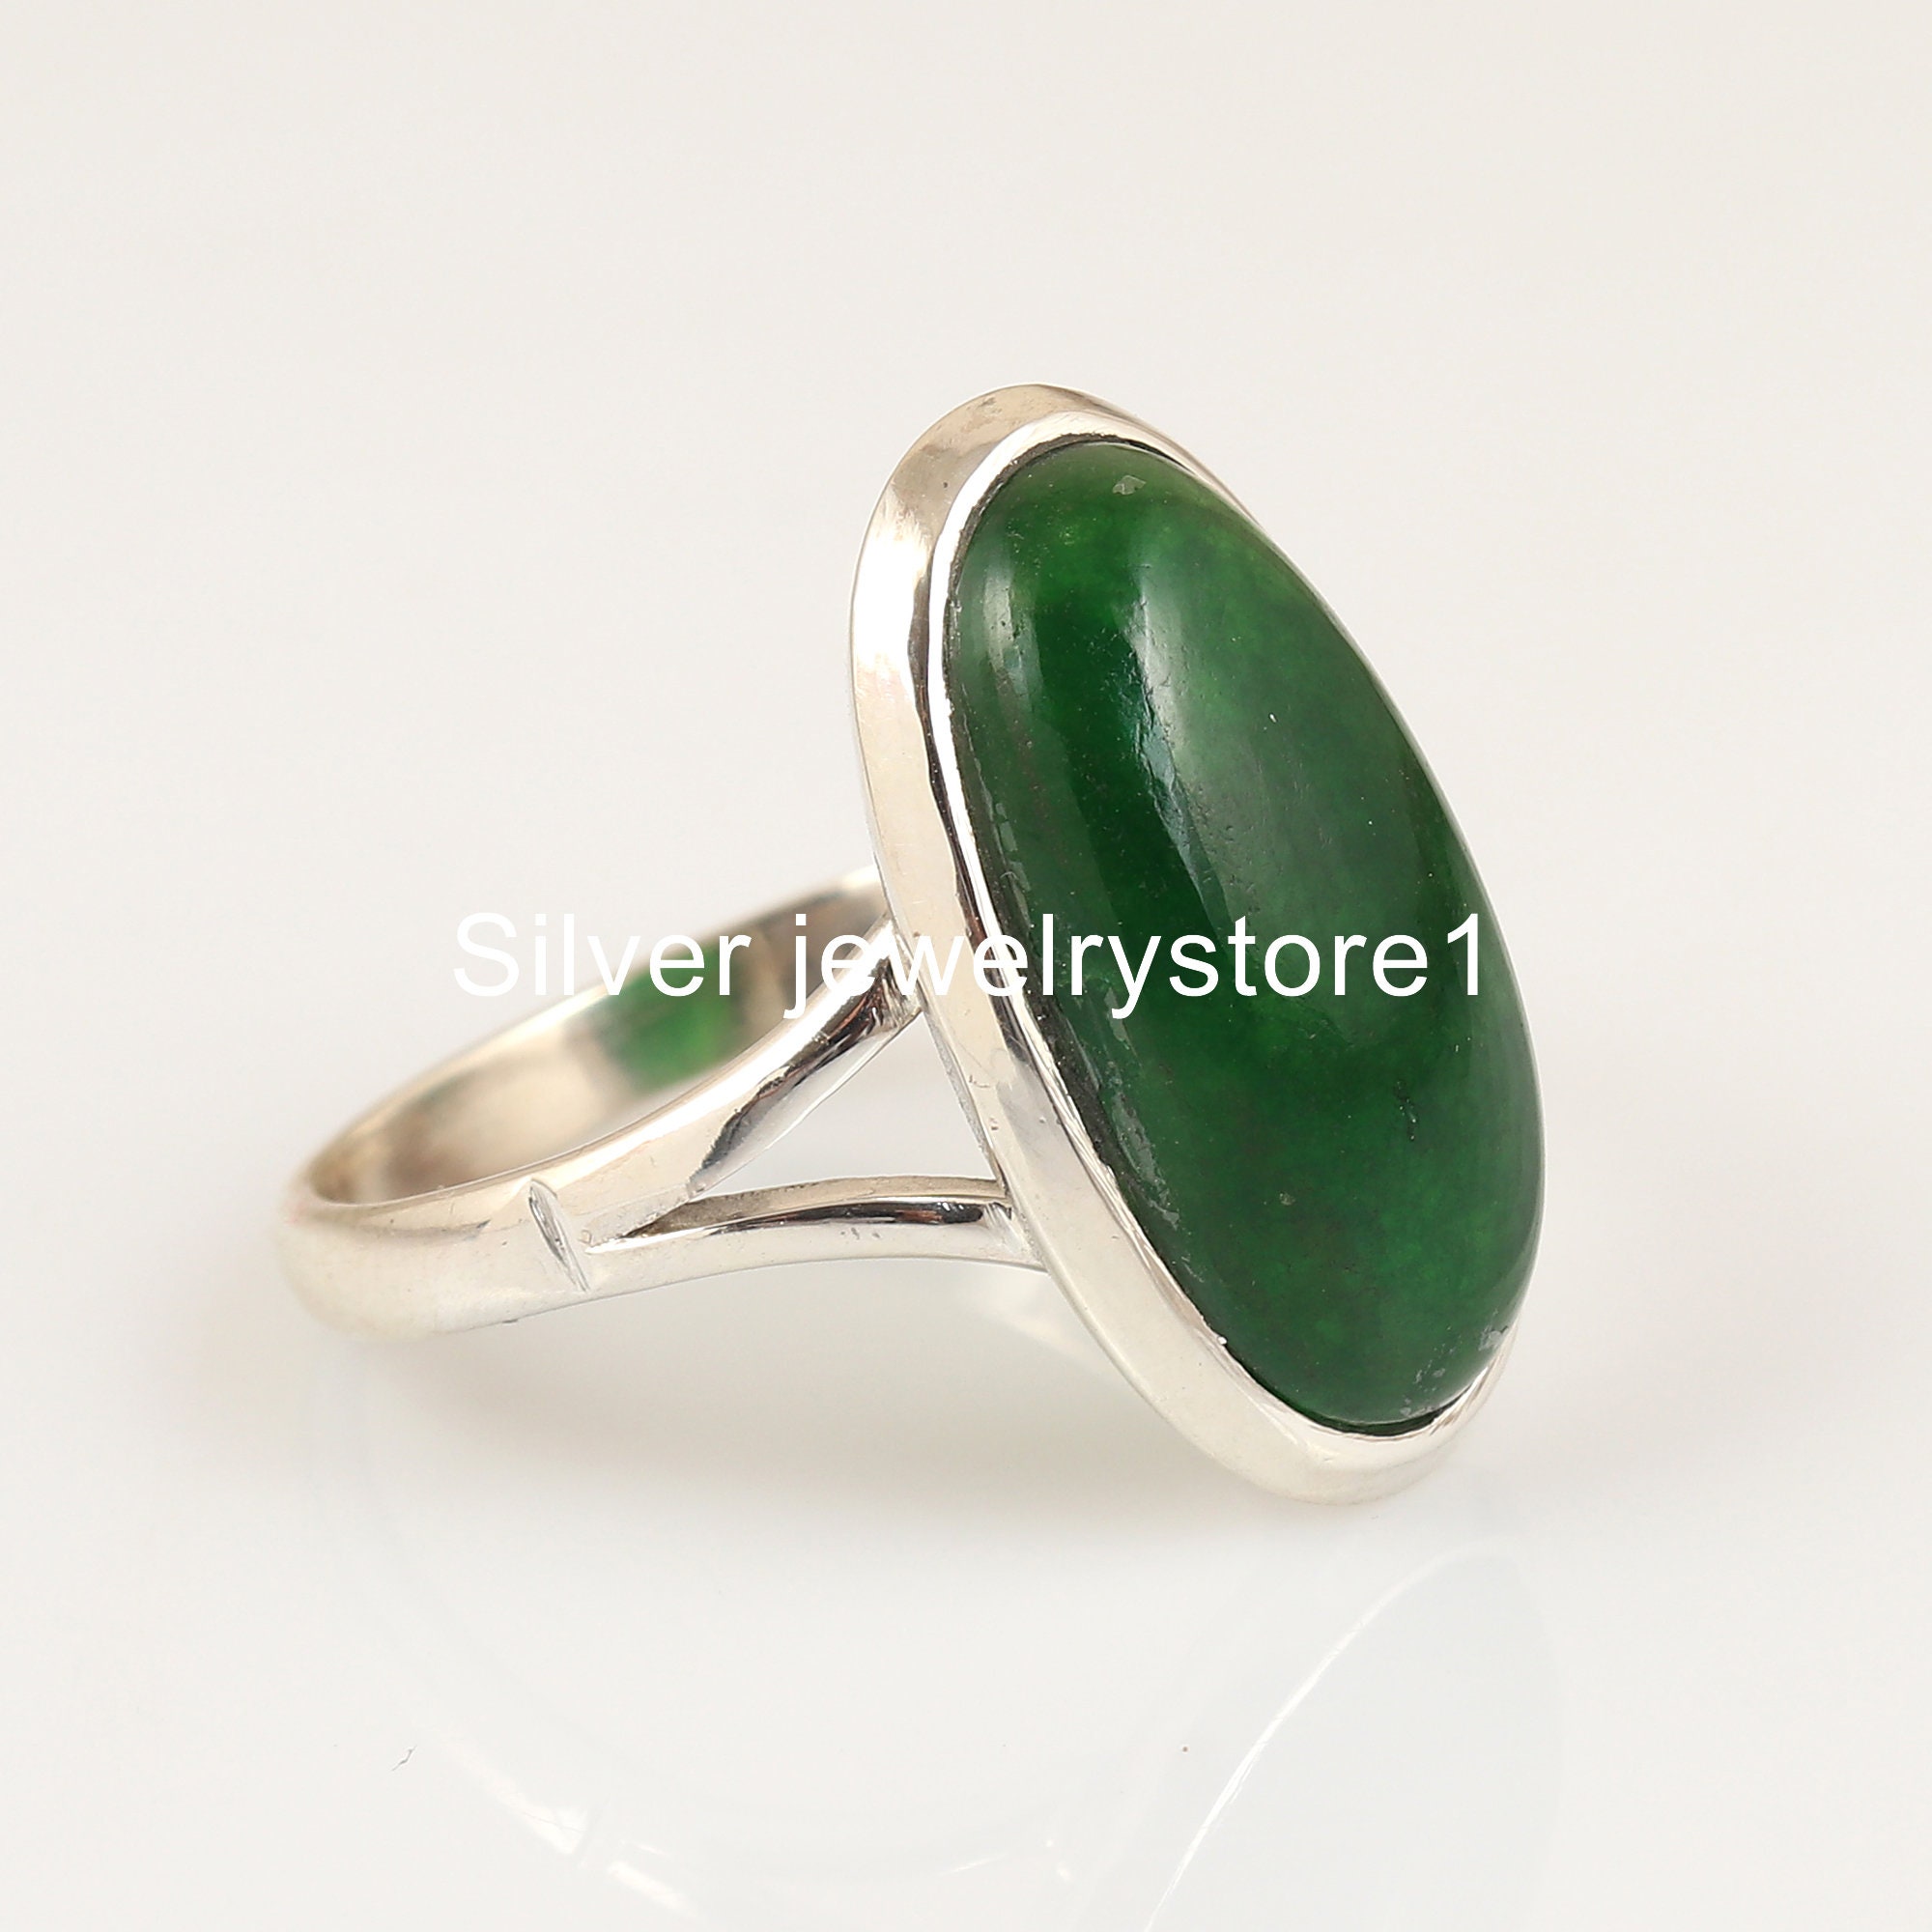 9 Best Substitutes of Emerald Stone